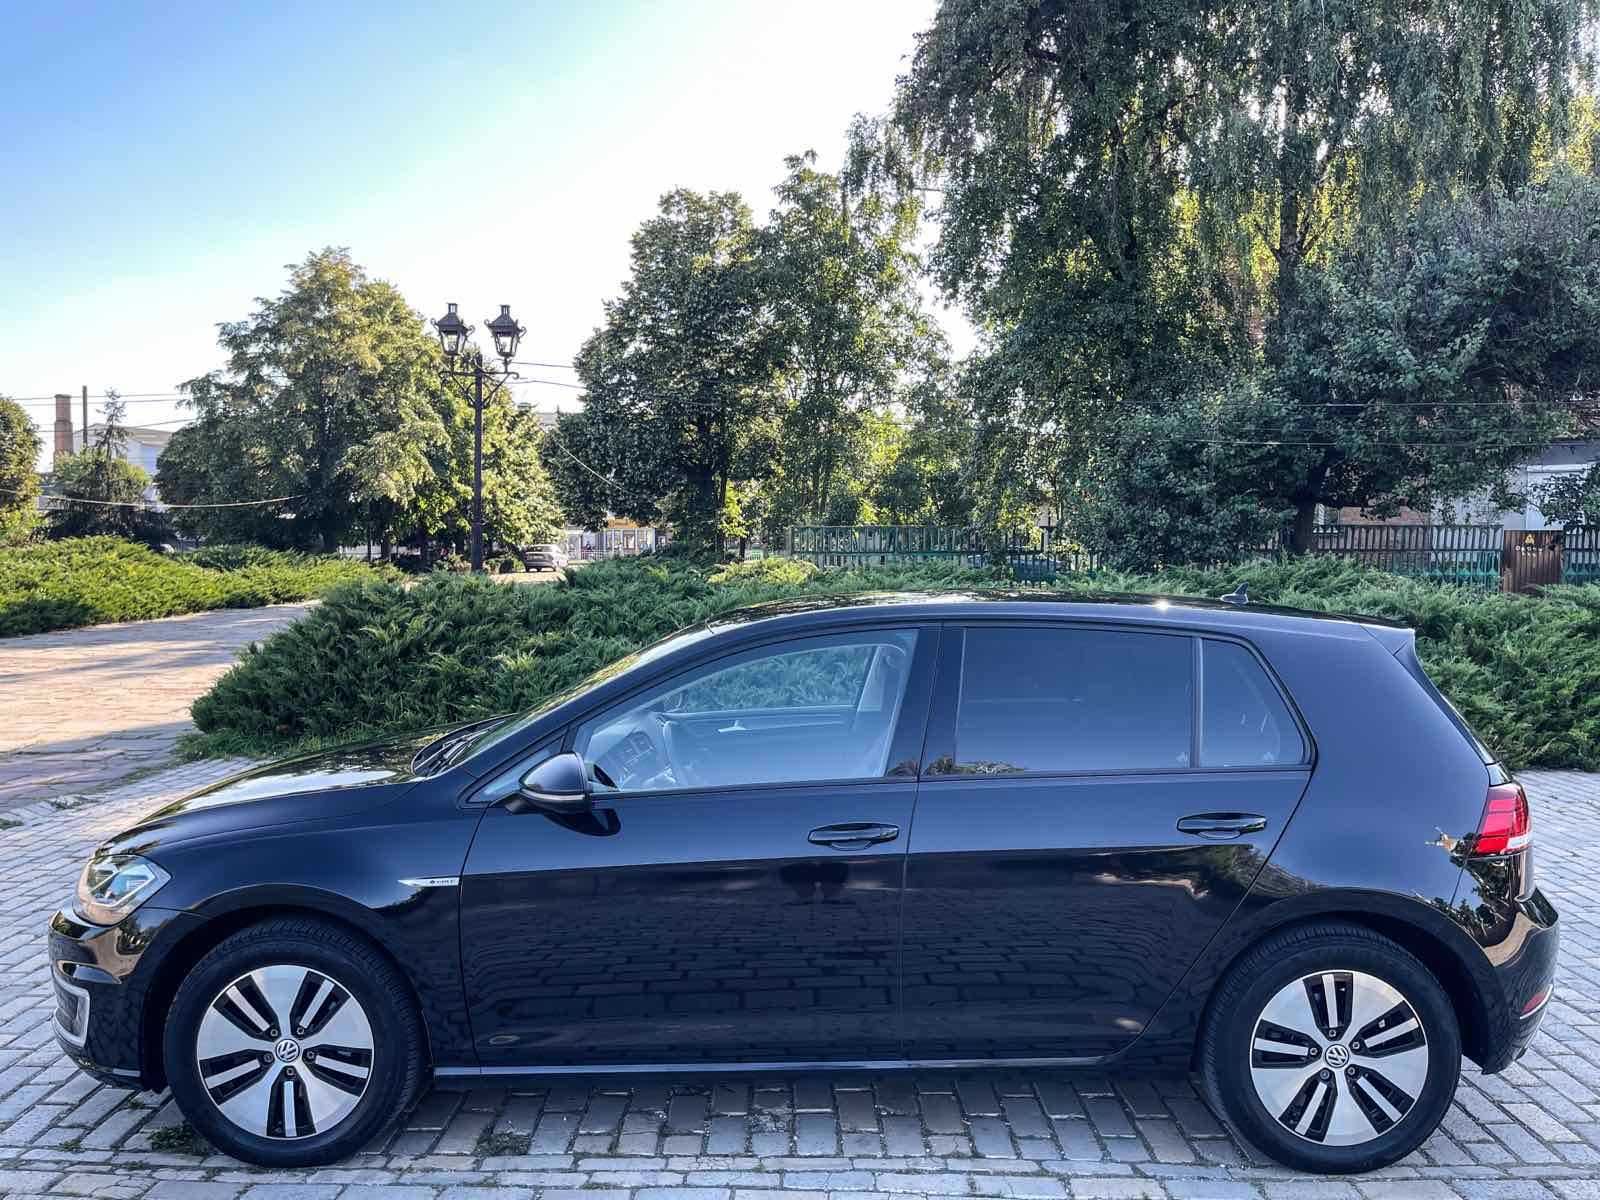 Volkswagen e-Golf 2018